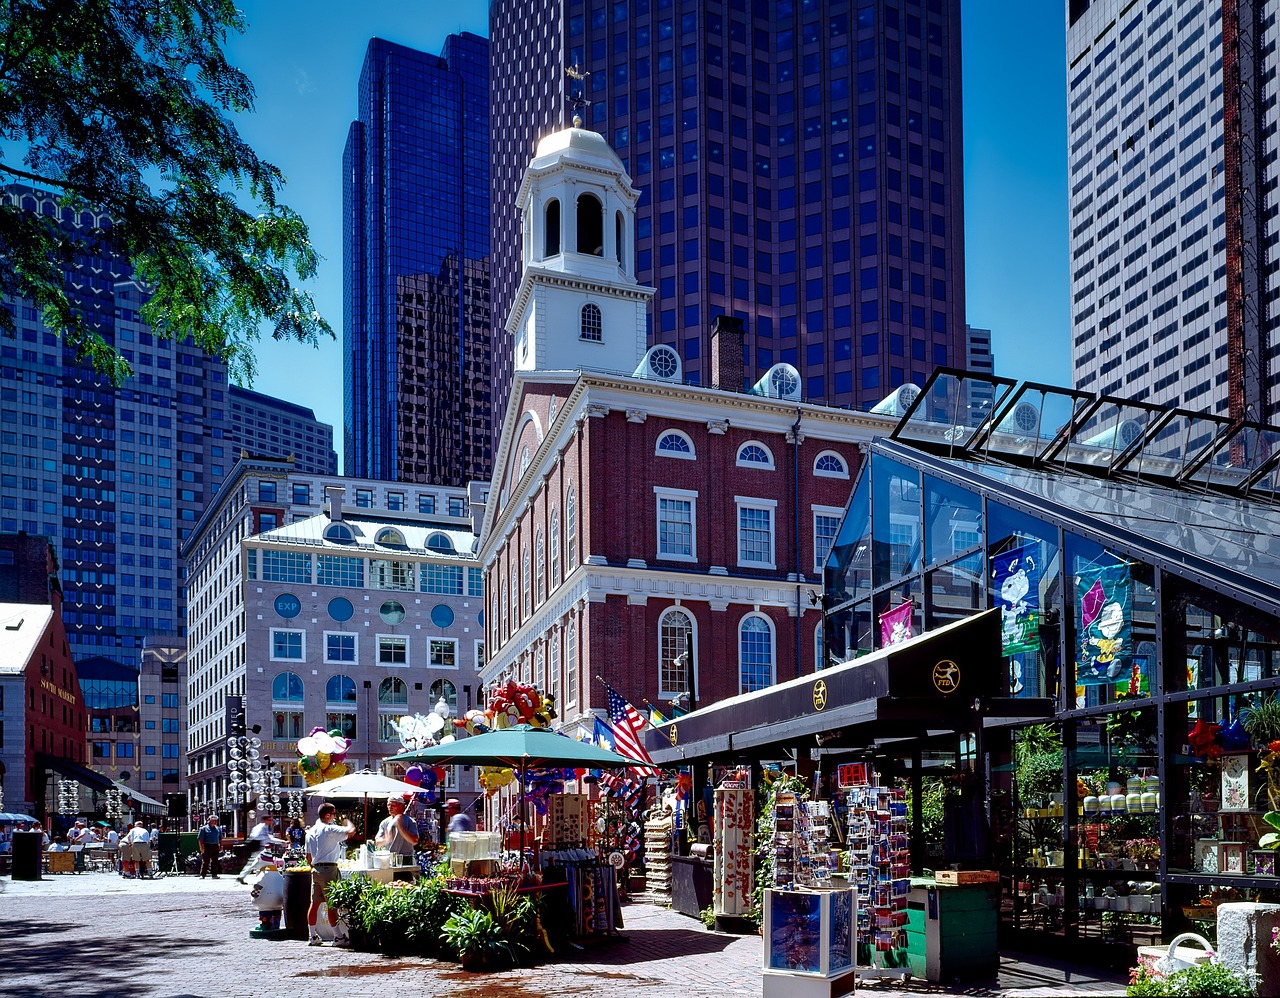 4-Day Boston College Tour and Landmarks